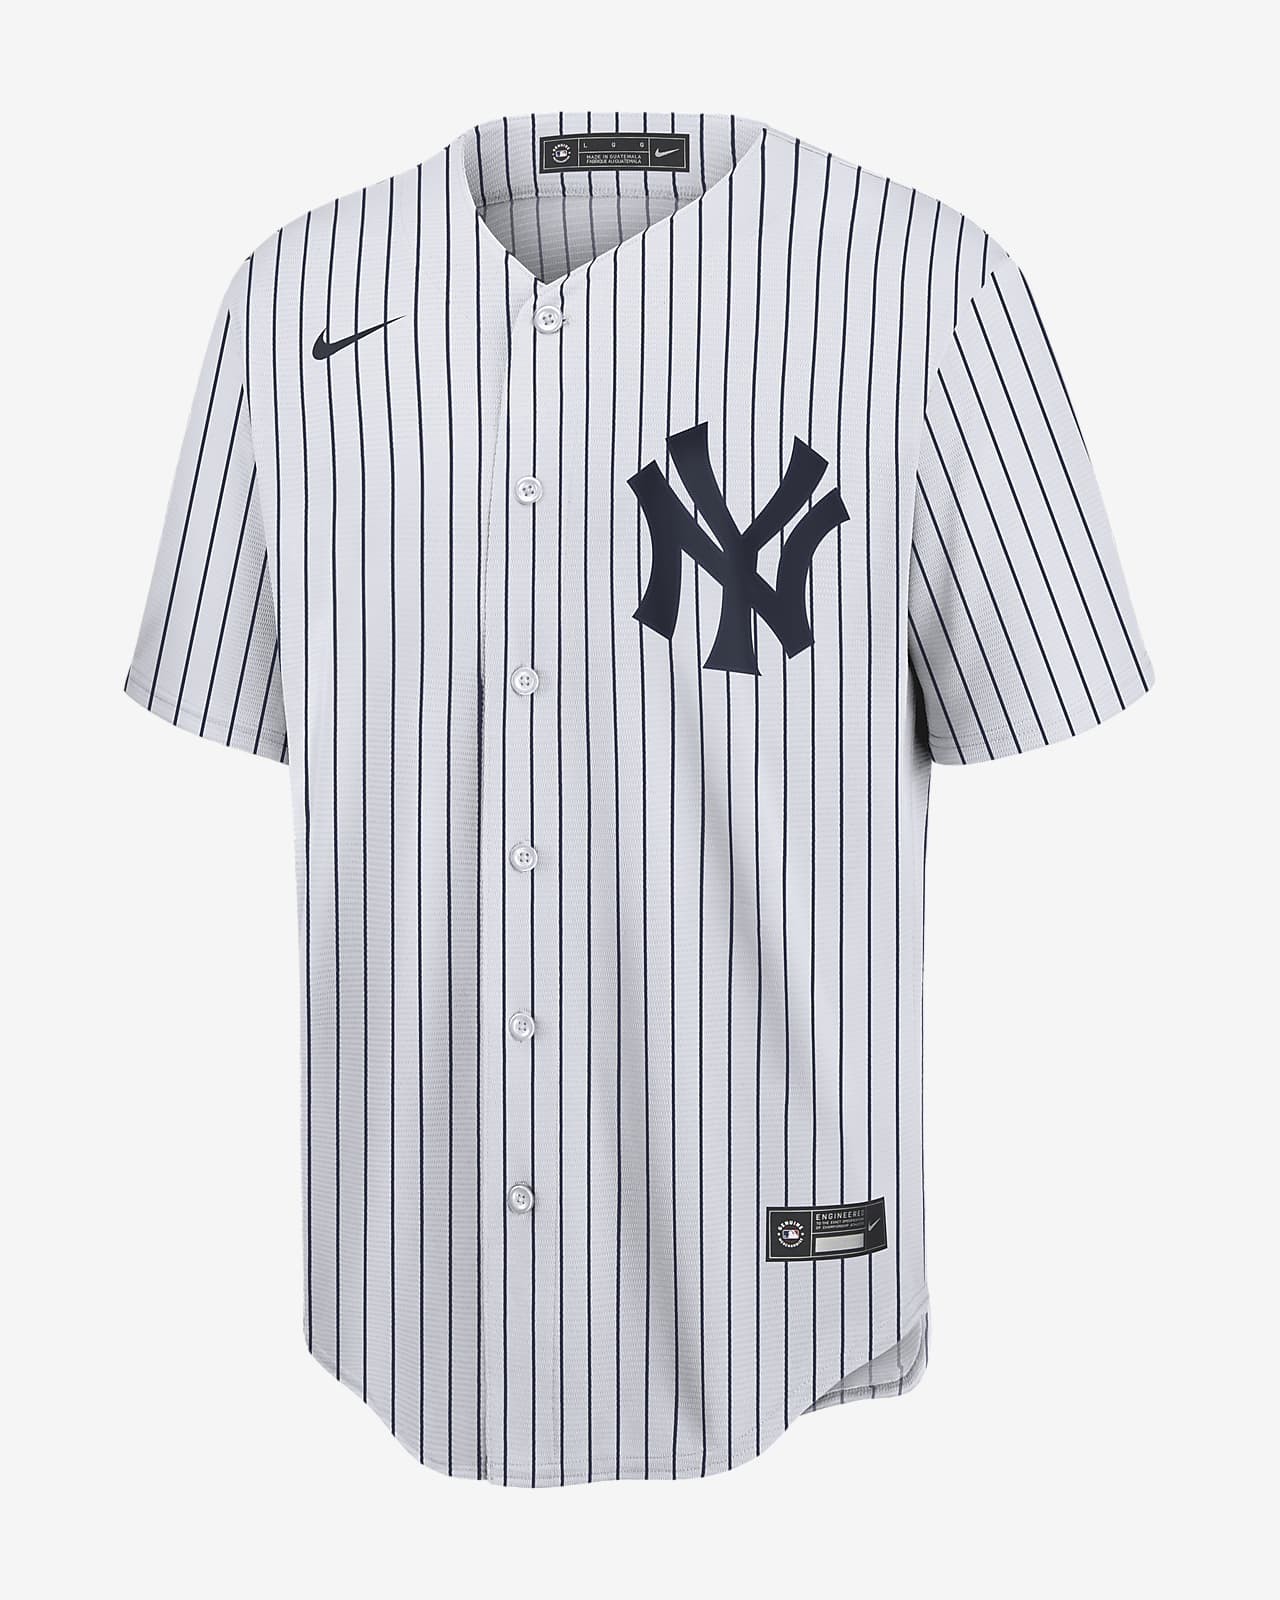 new york yankees baseball top